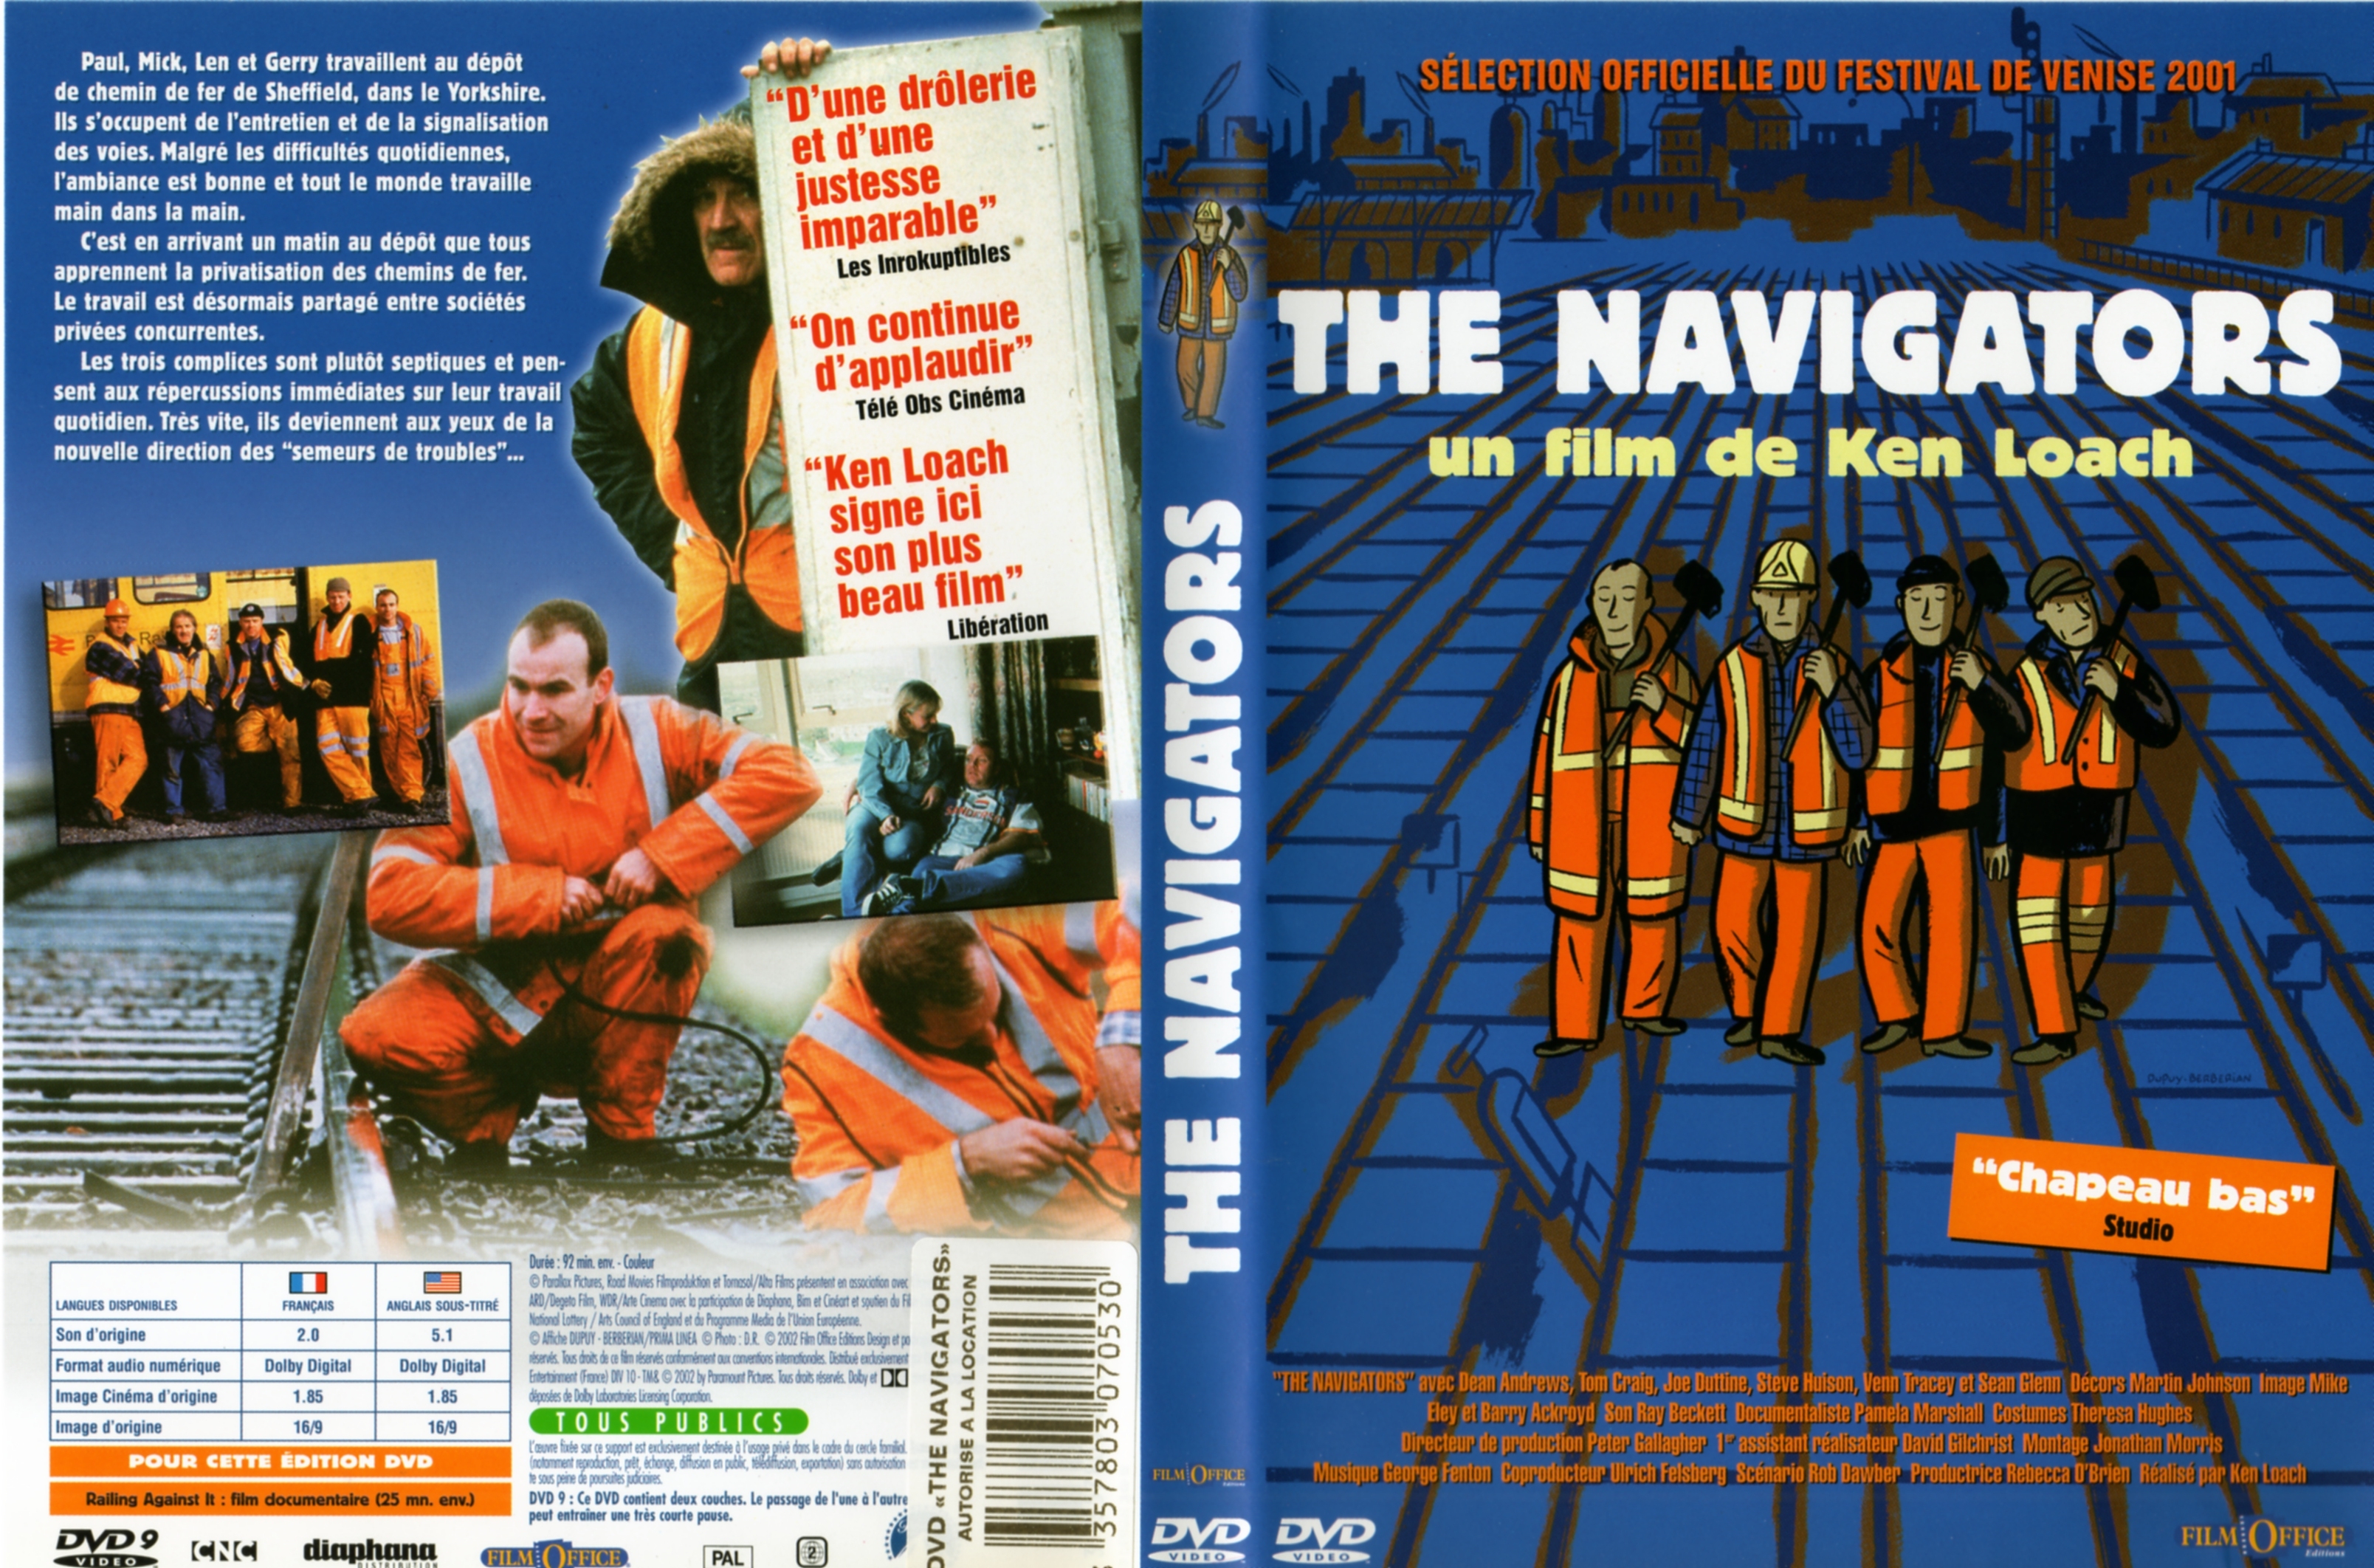 Jaquette DVD The navigators